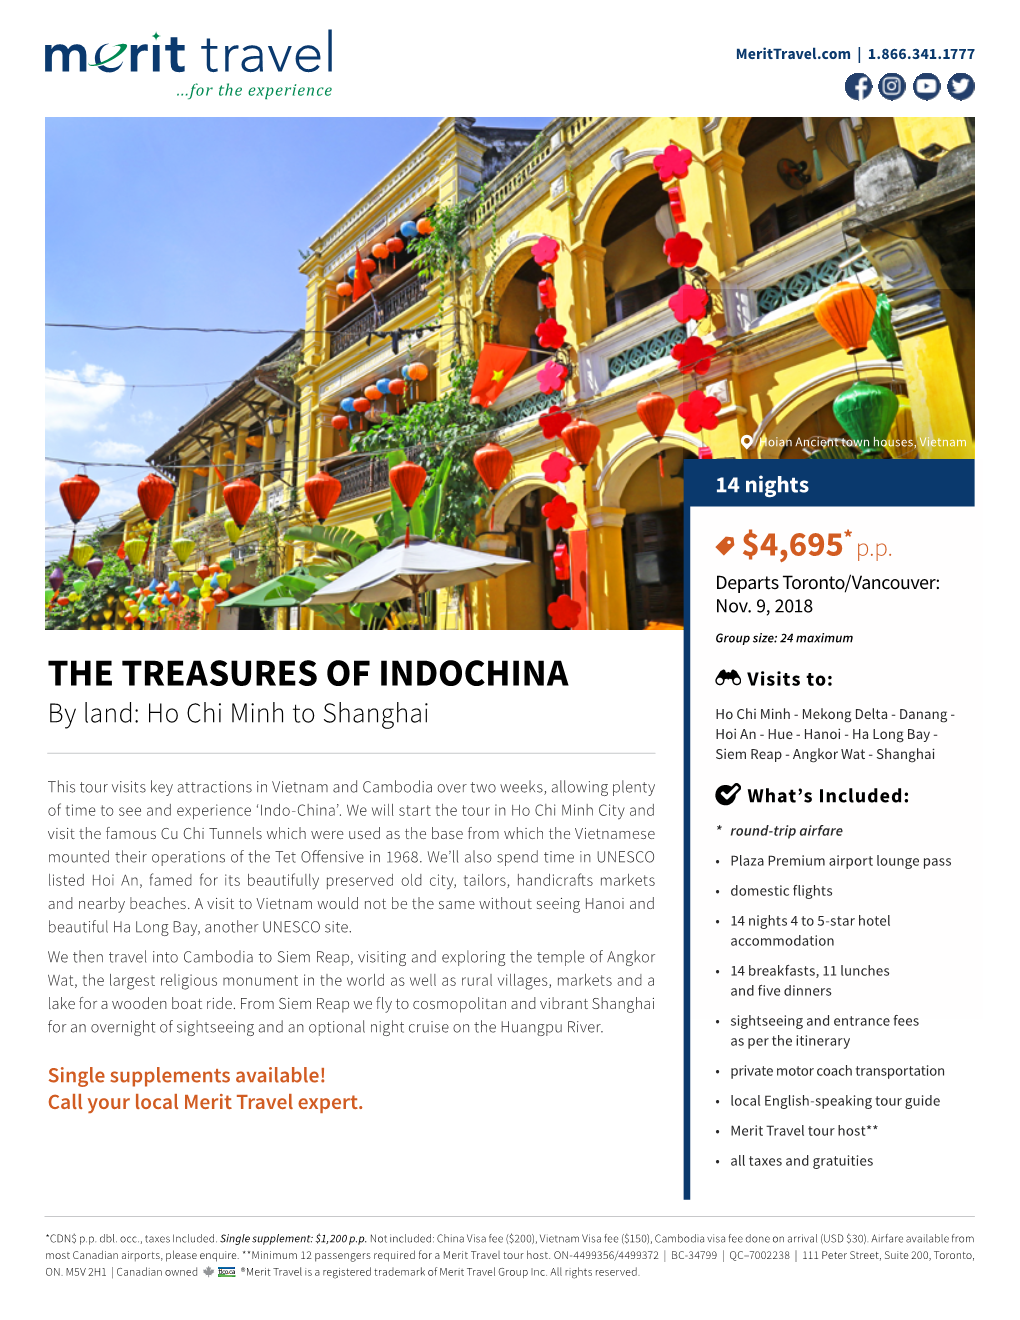 The Treasures of Indochina